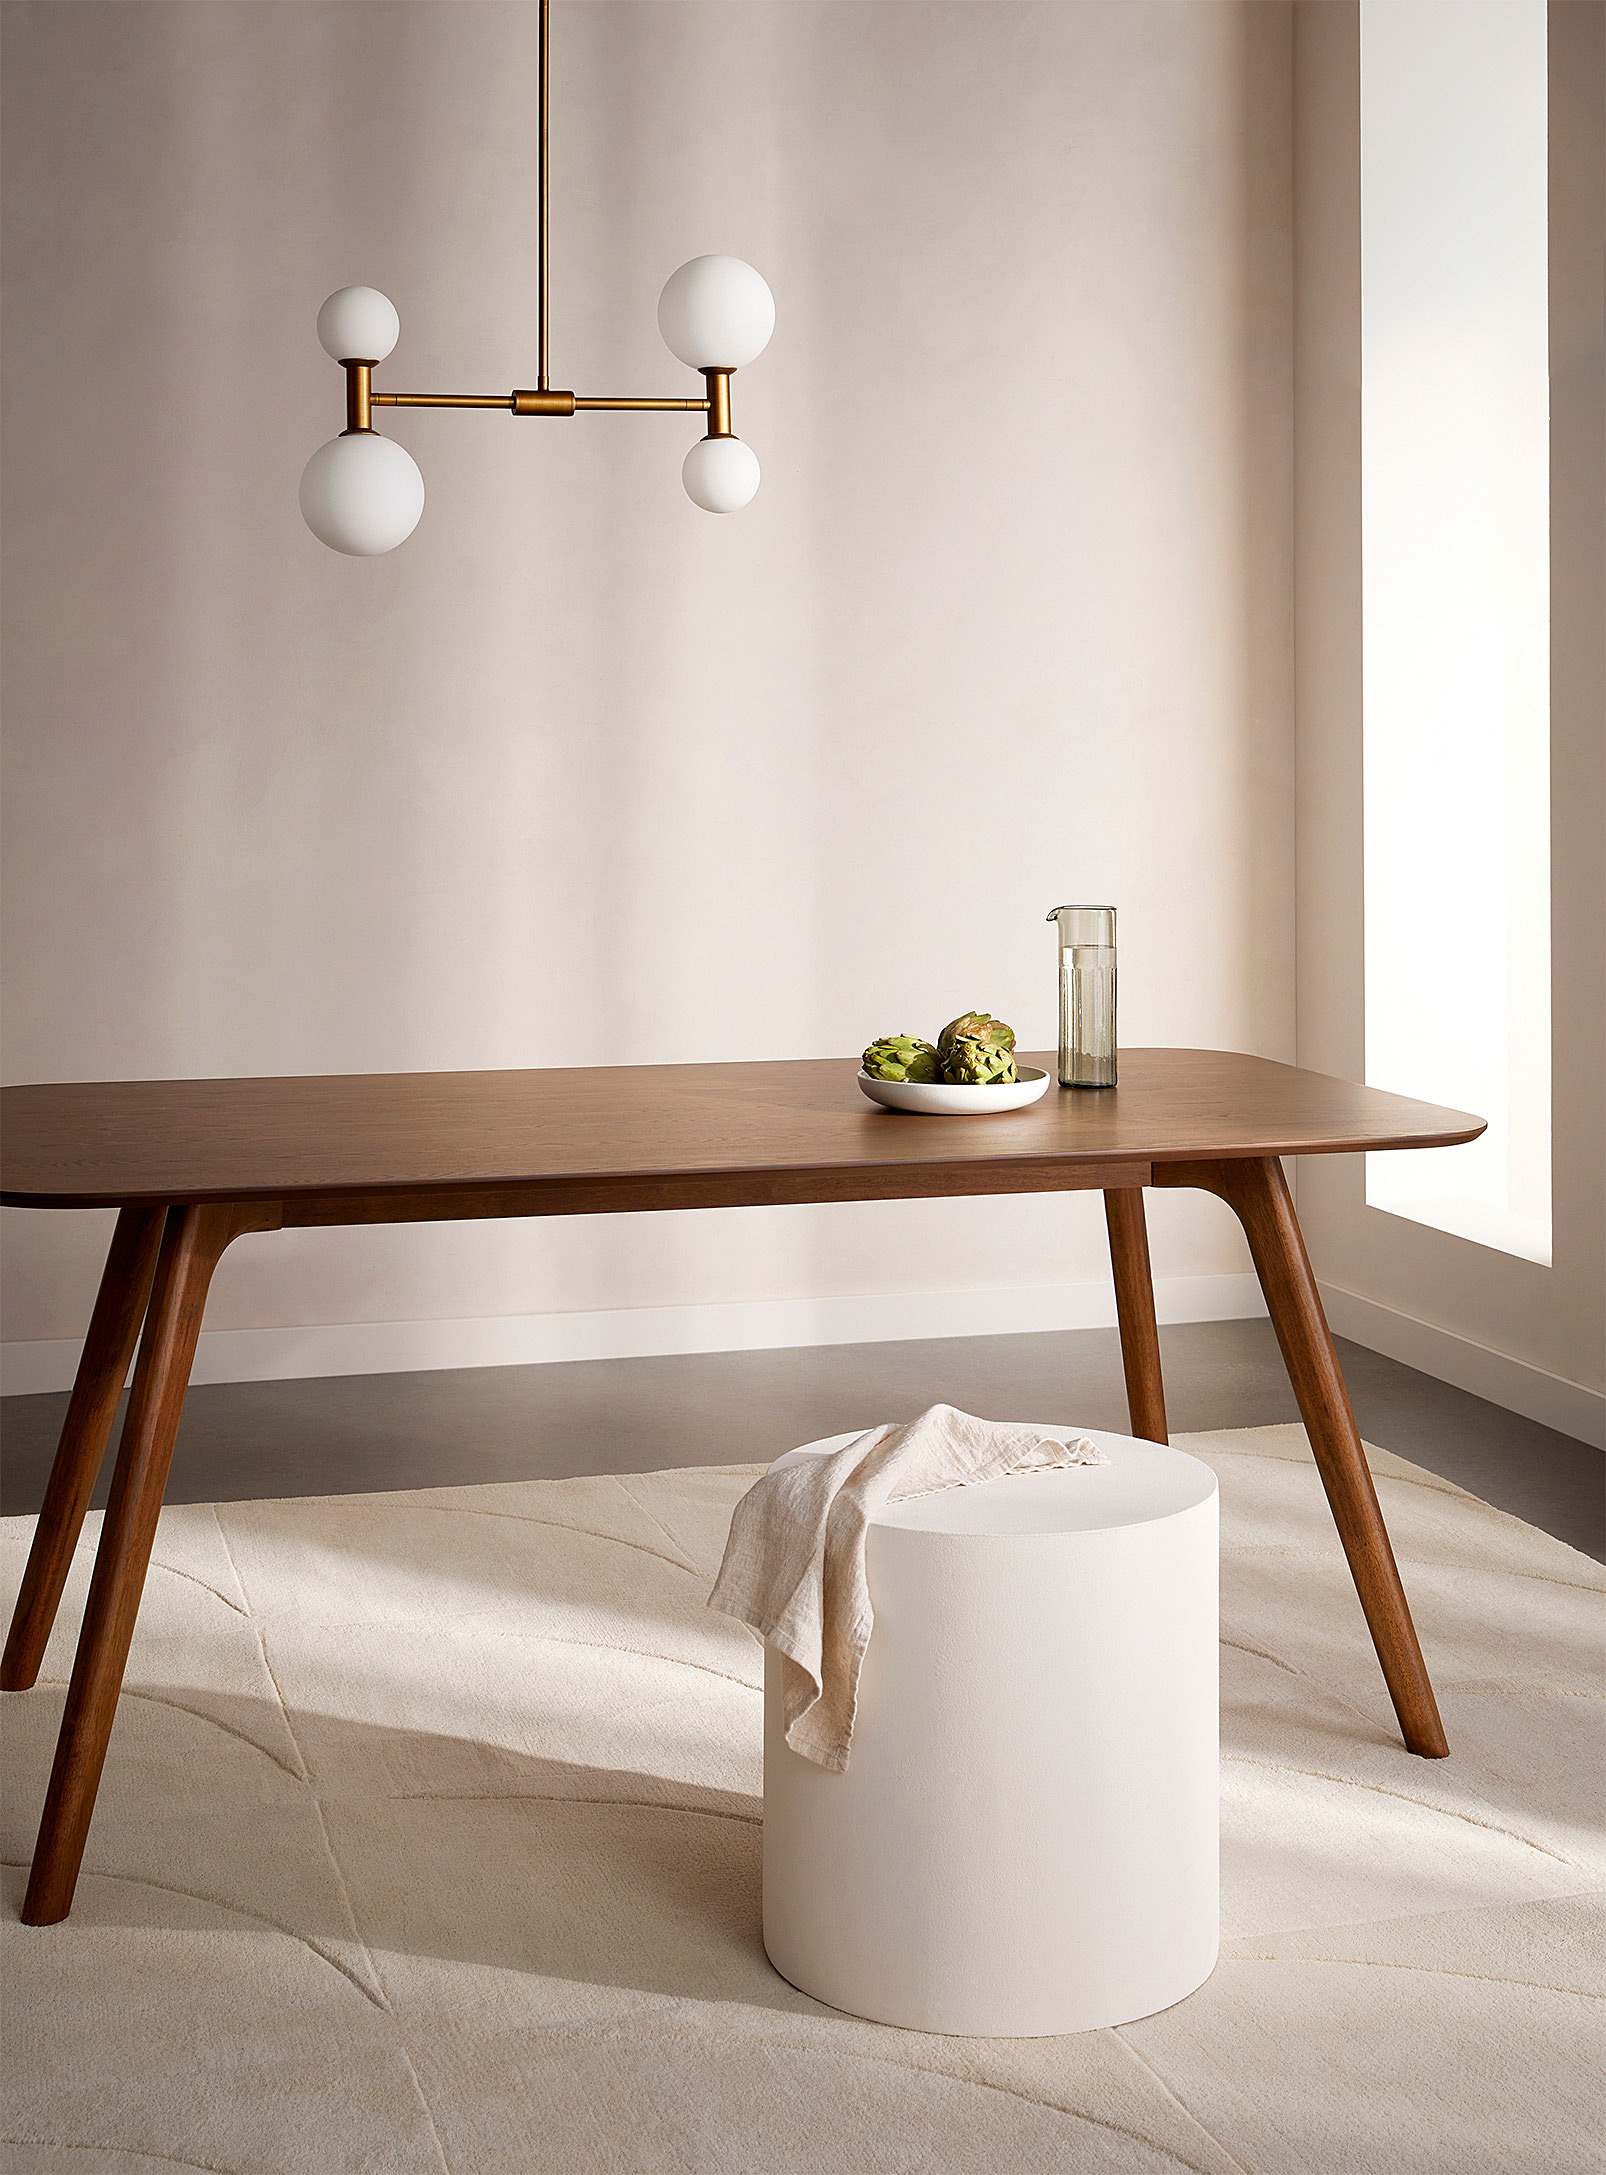 Simons Maison - Sleek wooden table